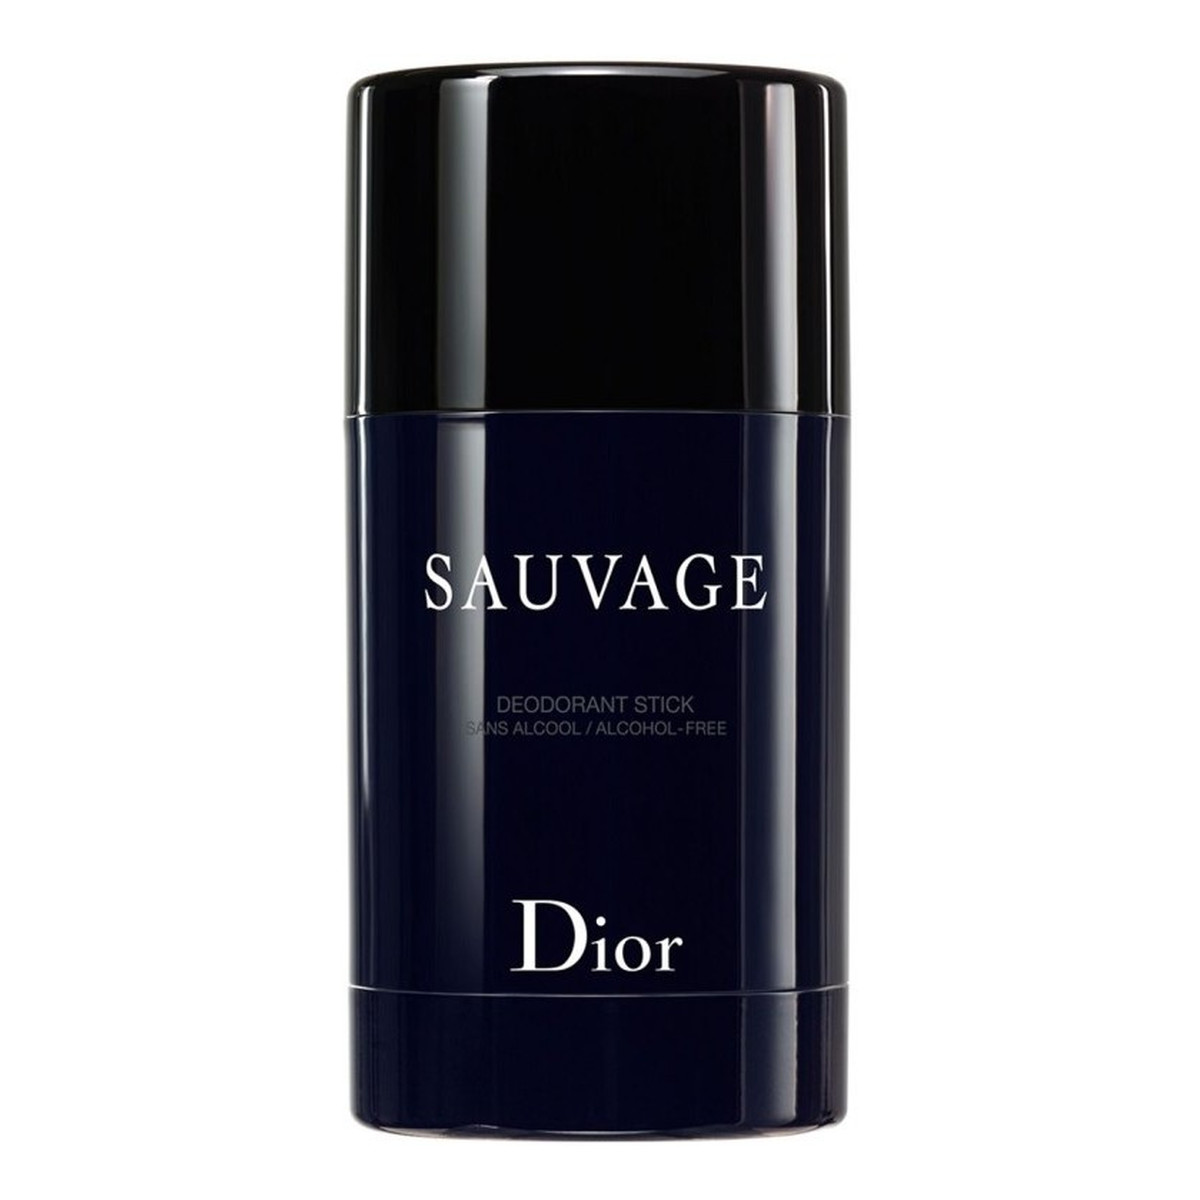 Dior Sauvage Dezodorant sztyft 75ml